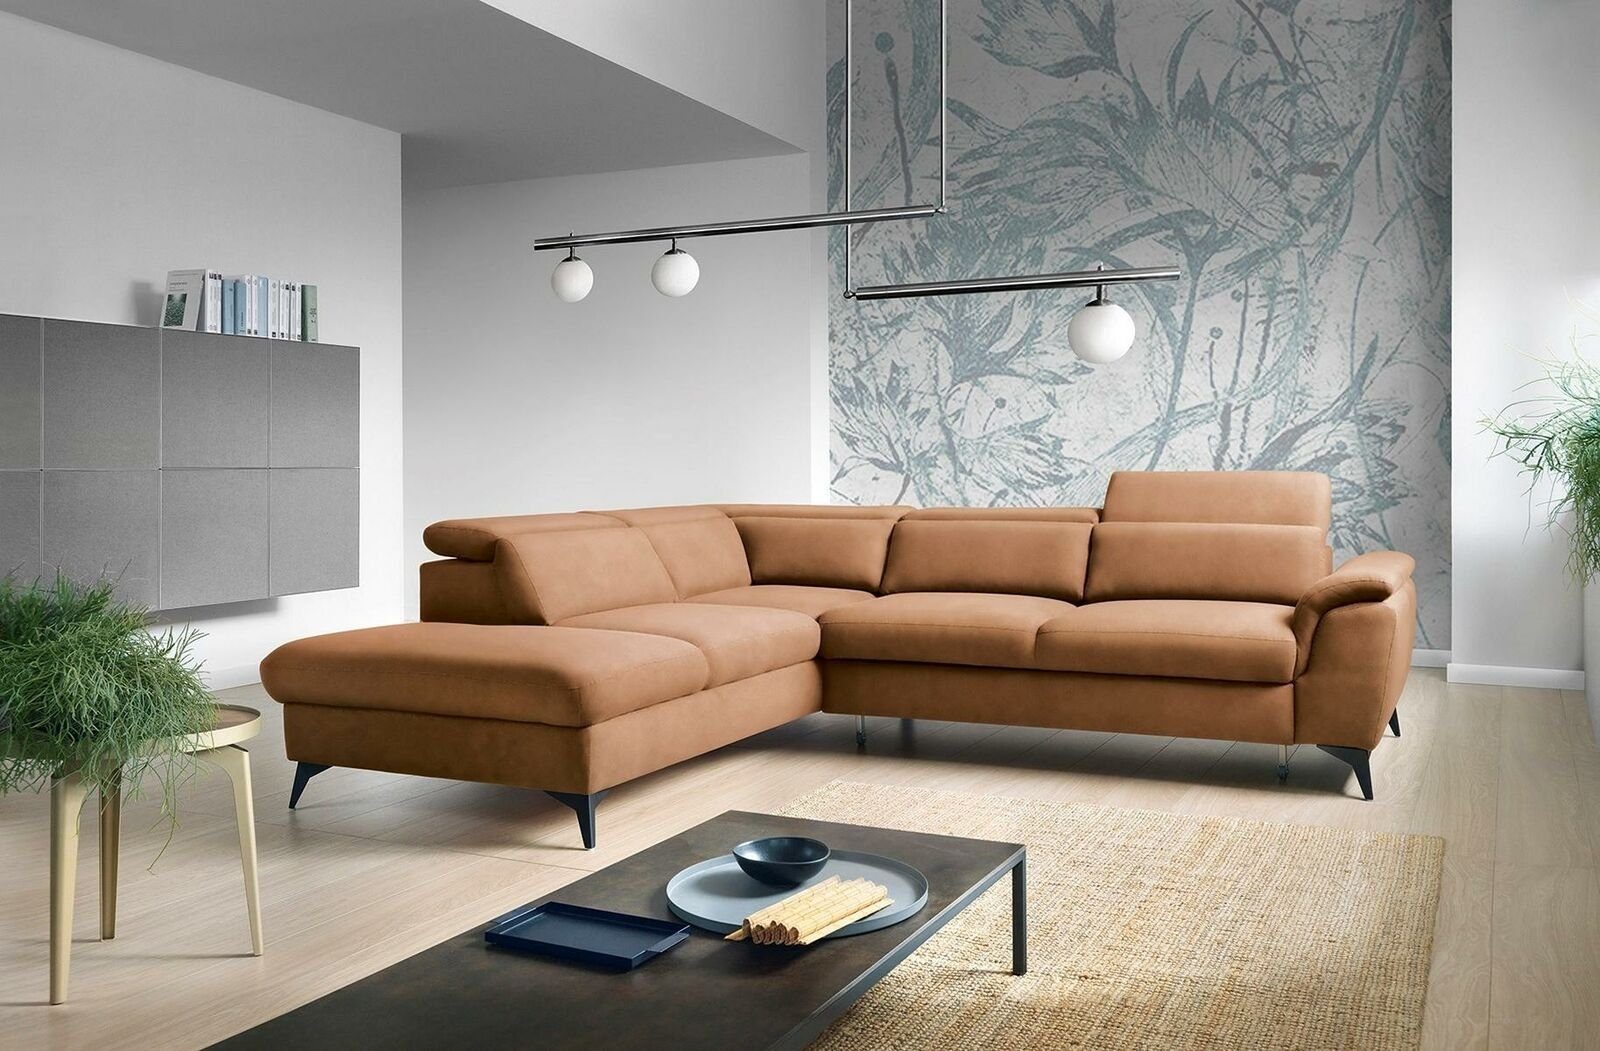 JVmoebel Ecksofa, Wohnzimmer Neu Polsterung Modern L-Form Braun Grün Design Sofas Ecksofa